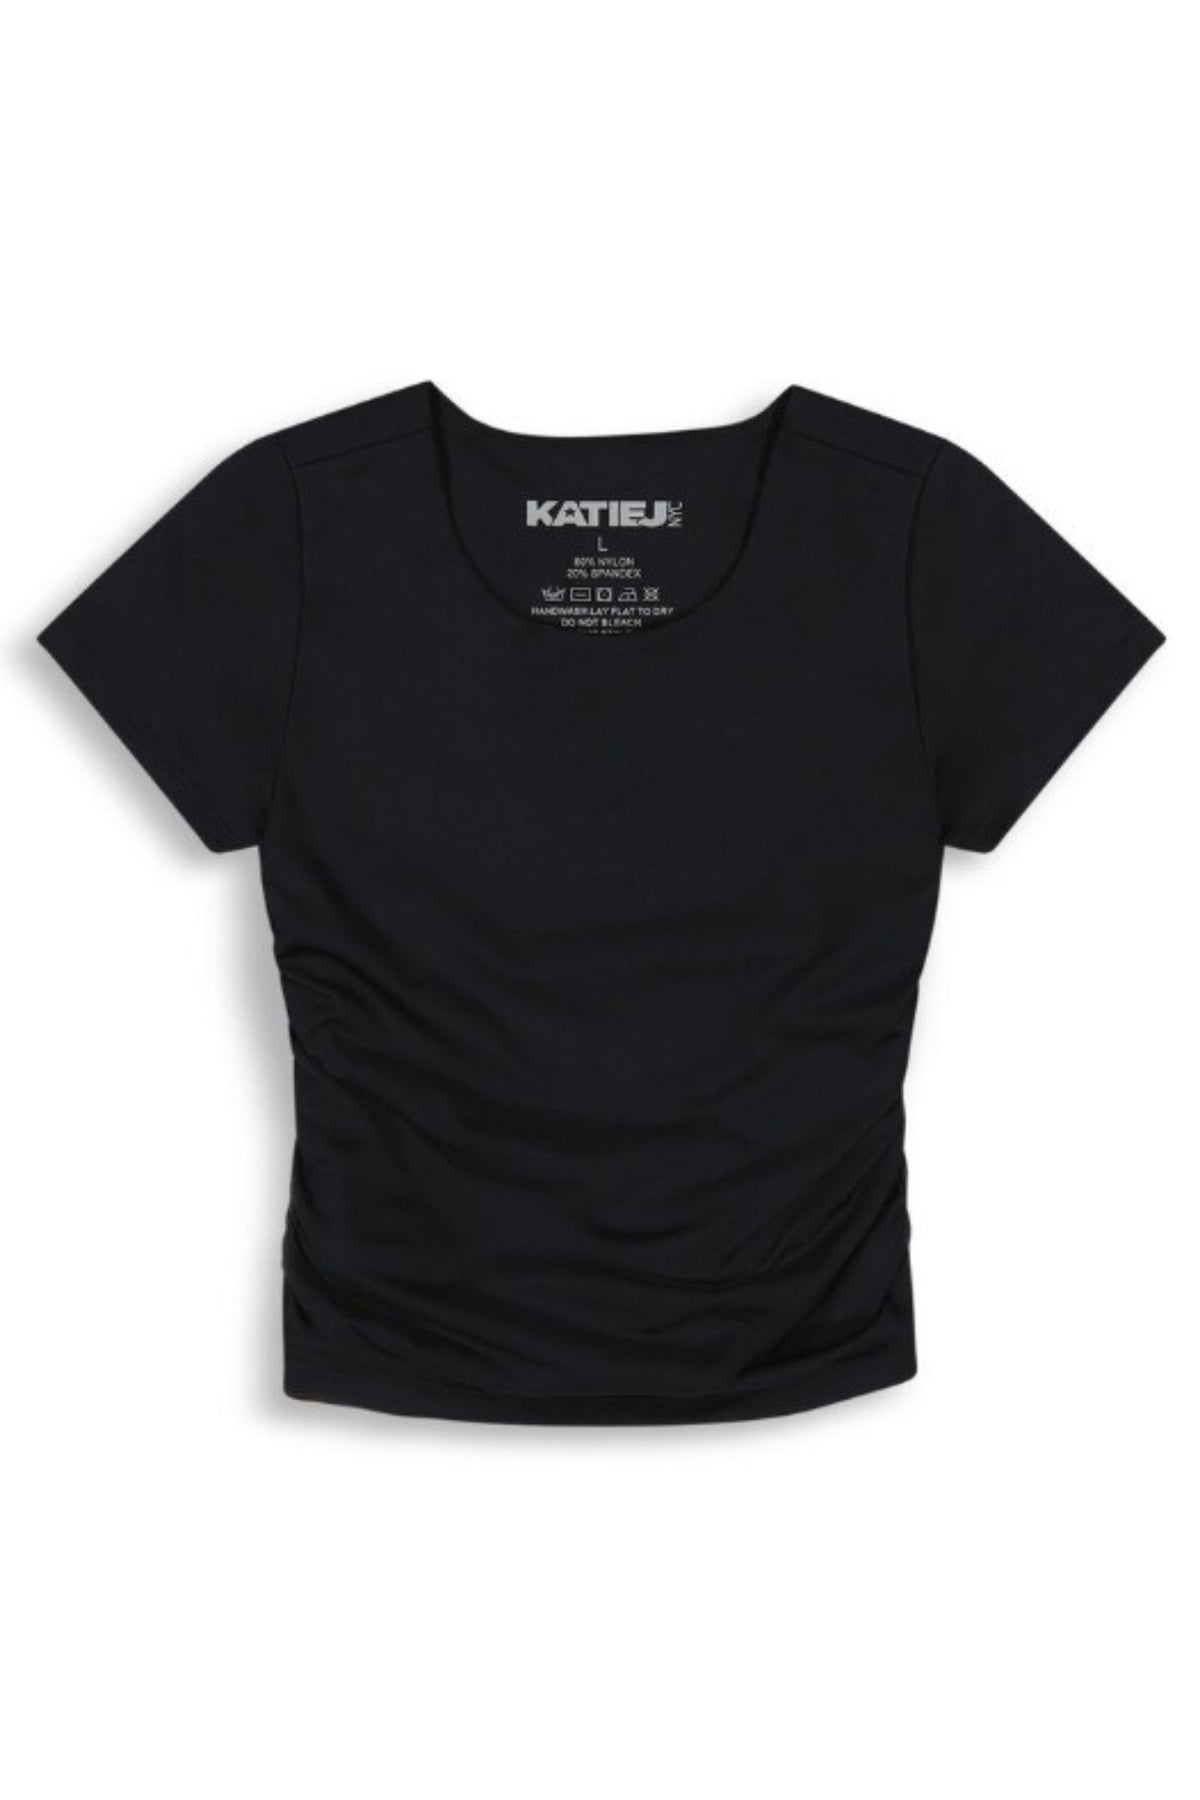 KatieJ NYC - Junior - Black Riley Ruched Short Sleeve Top